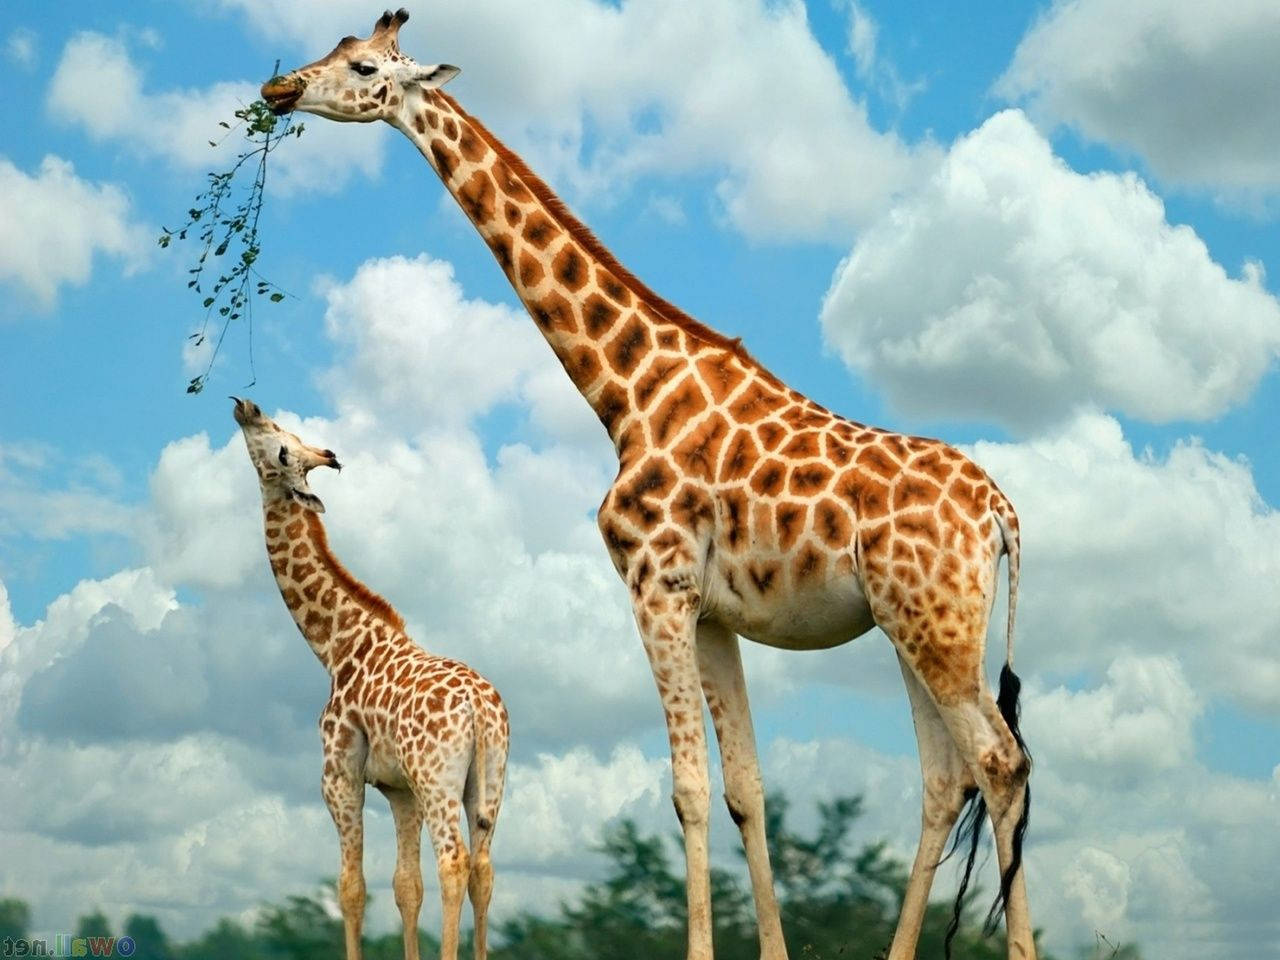 A Baby Giraffe's Feeding Time